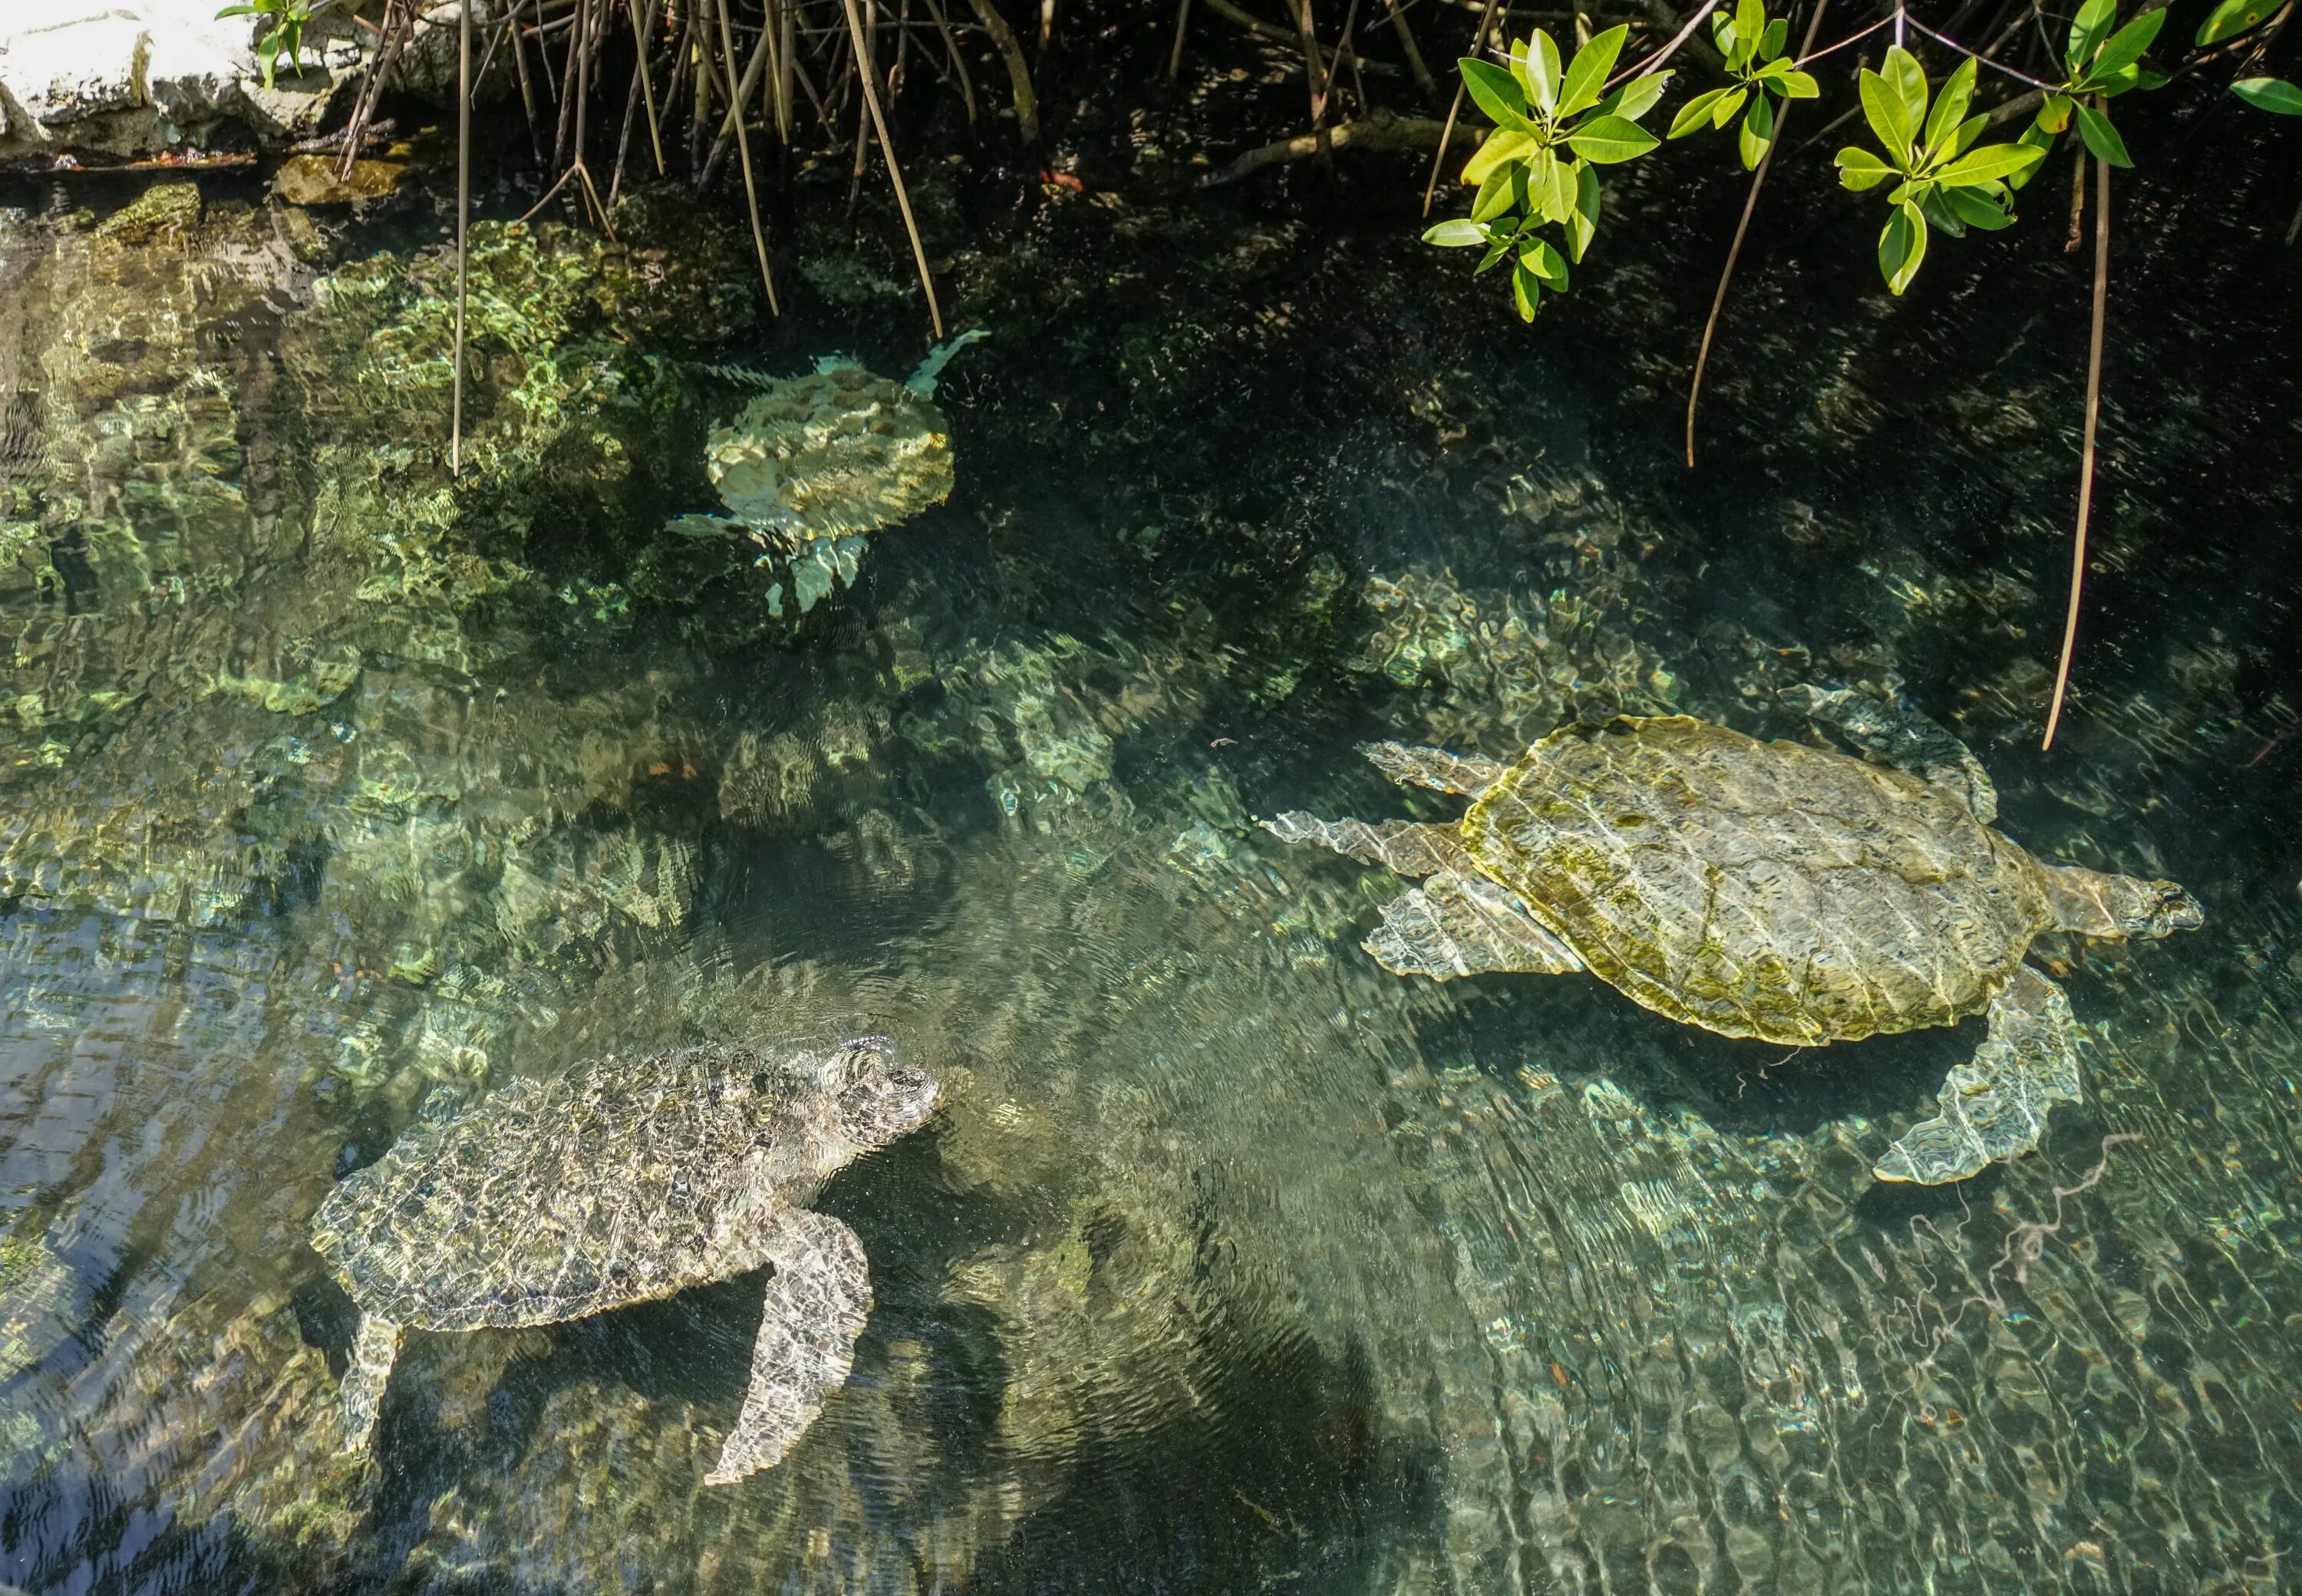 Черепаха в воде. Морская черепаха серая. Черепаха которая живет в воде. Черепахи в воде которые живут в тропиках.